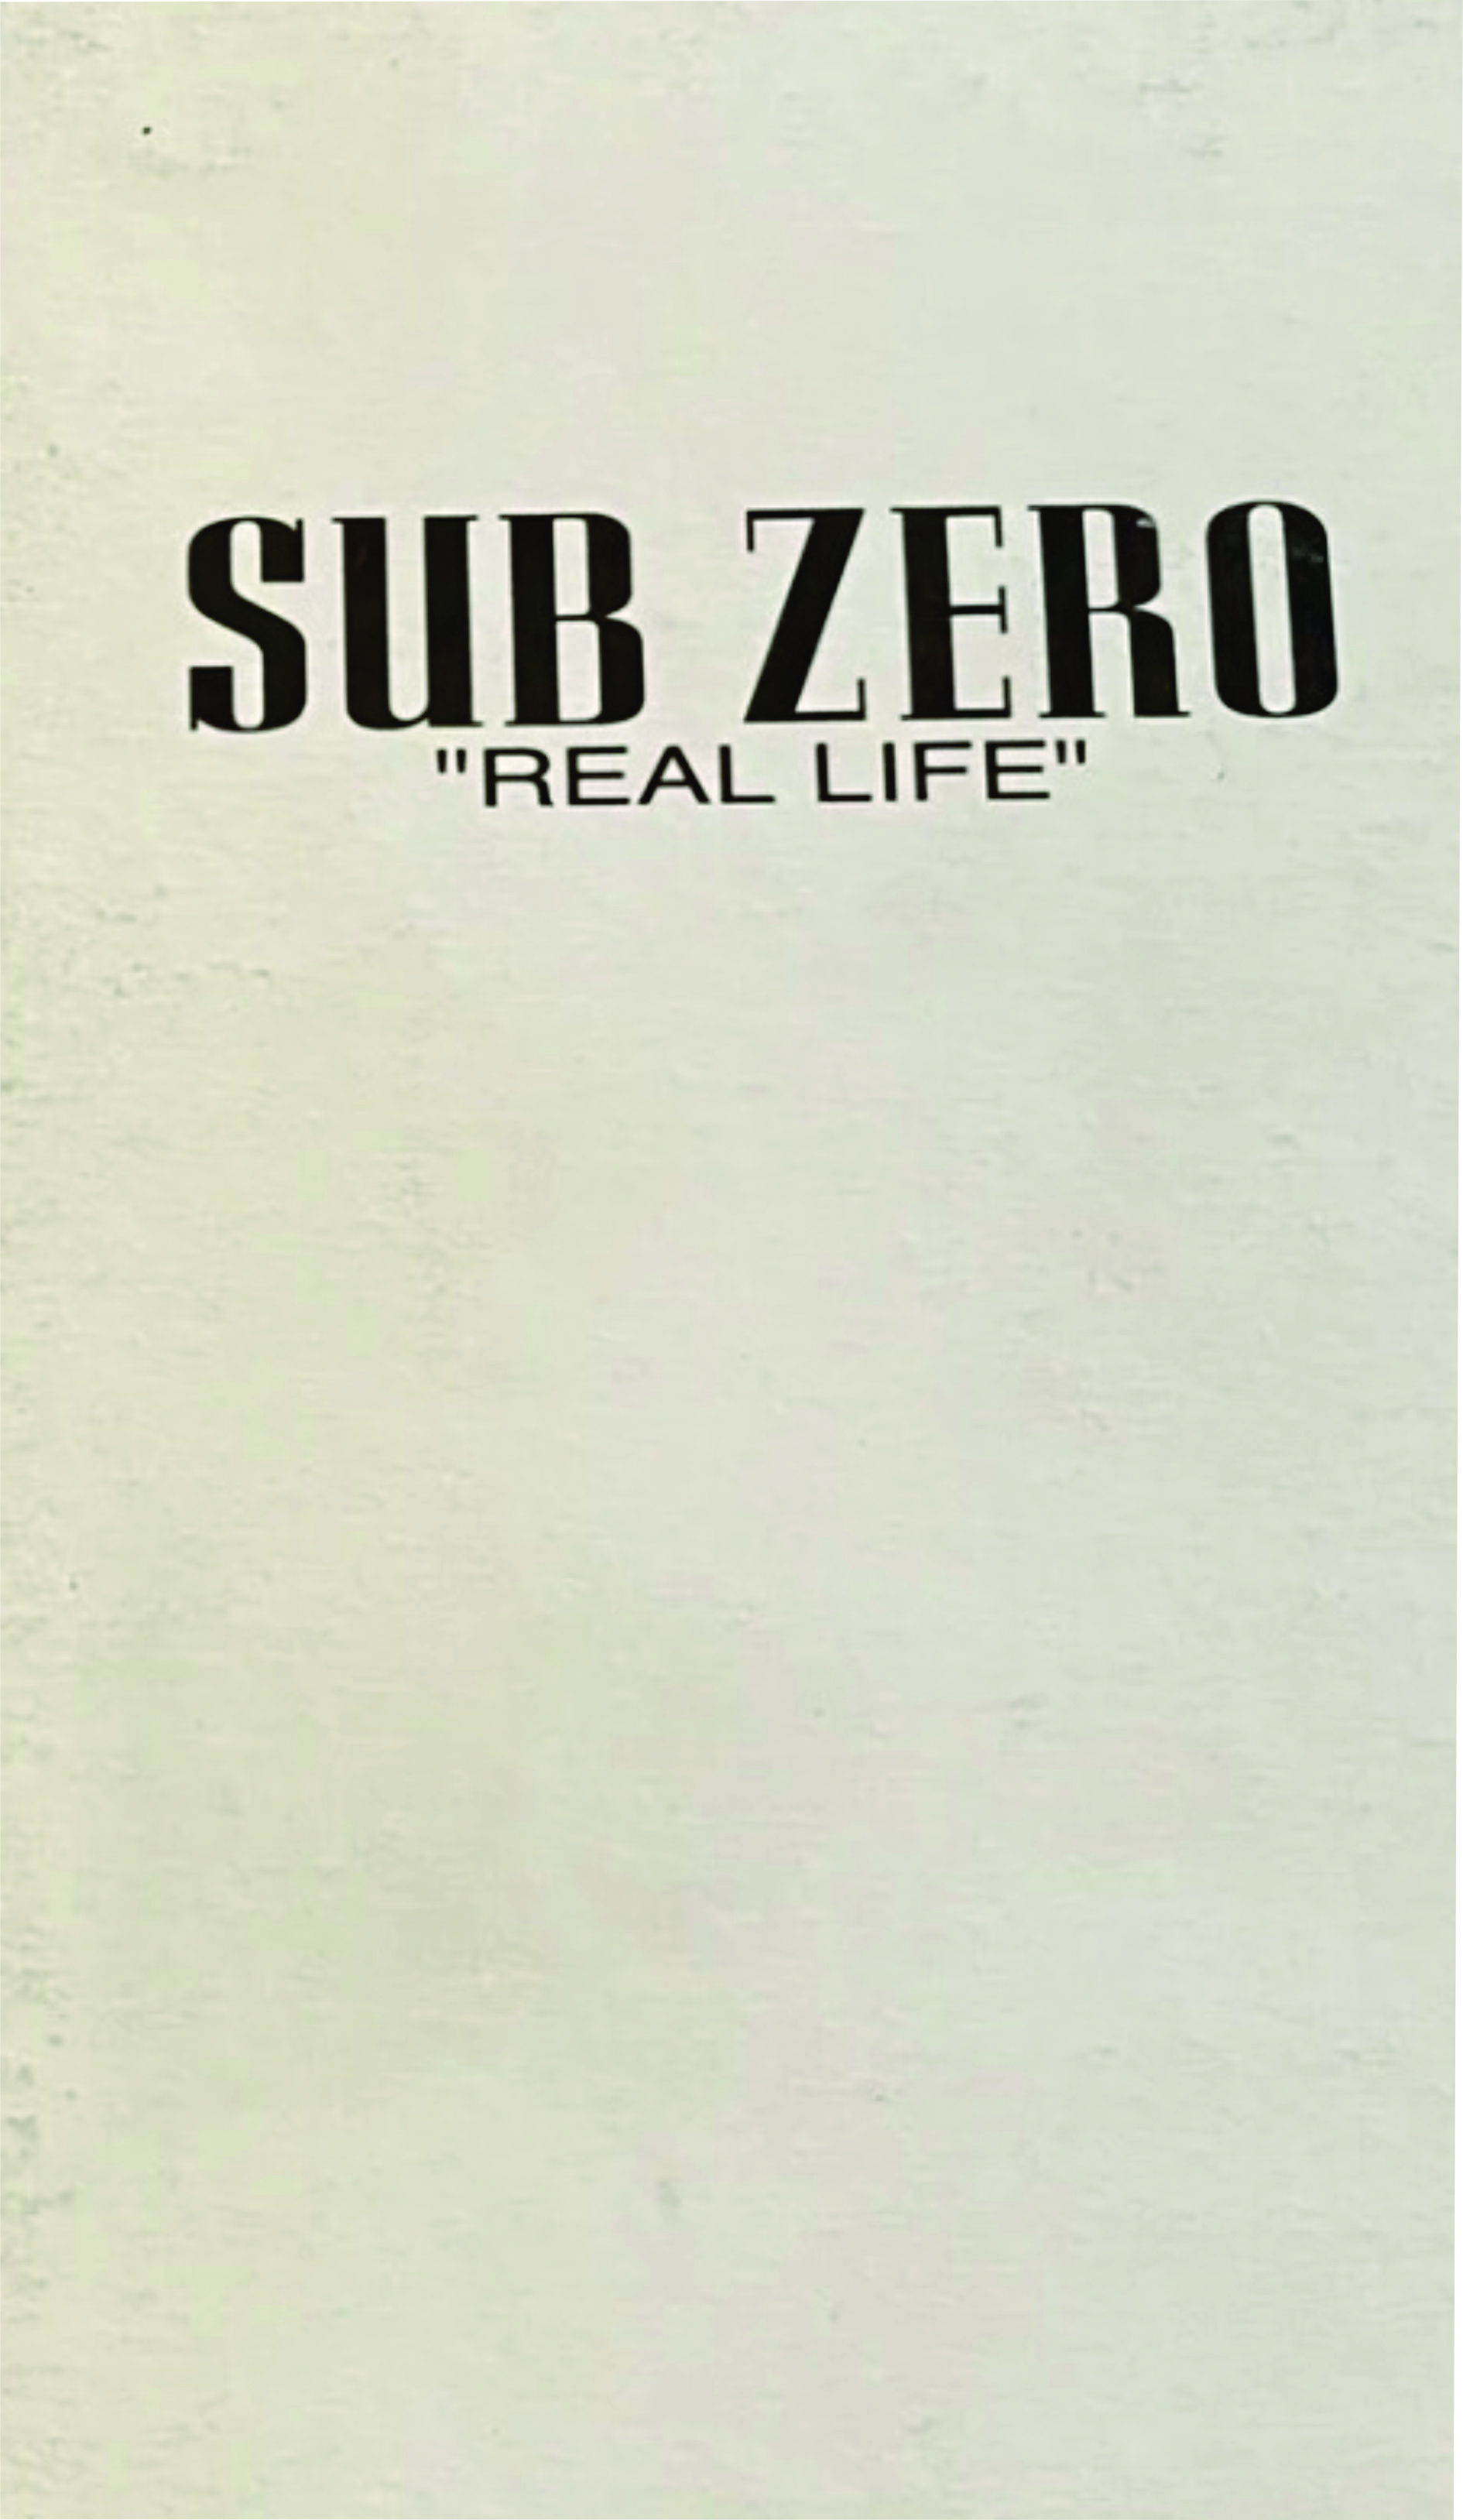 Sub Zero - Real Life cover art